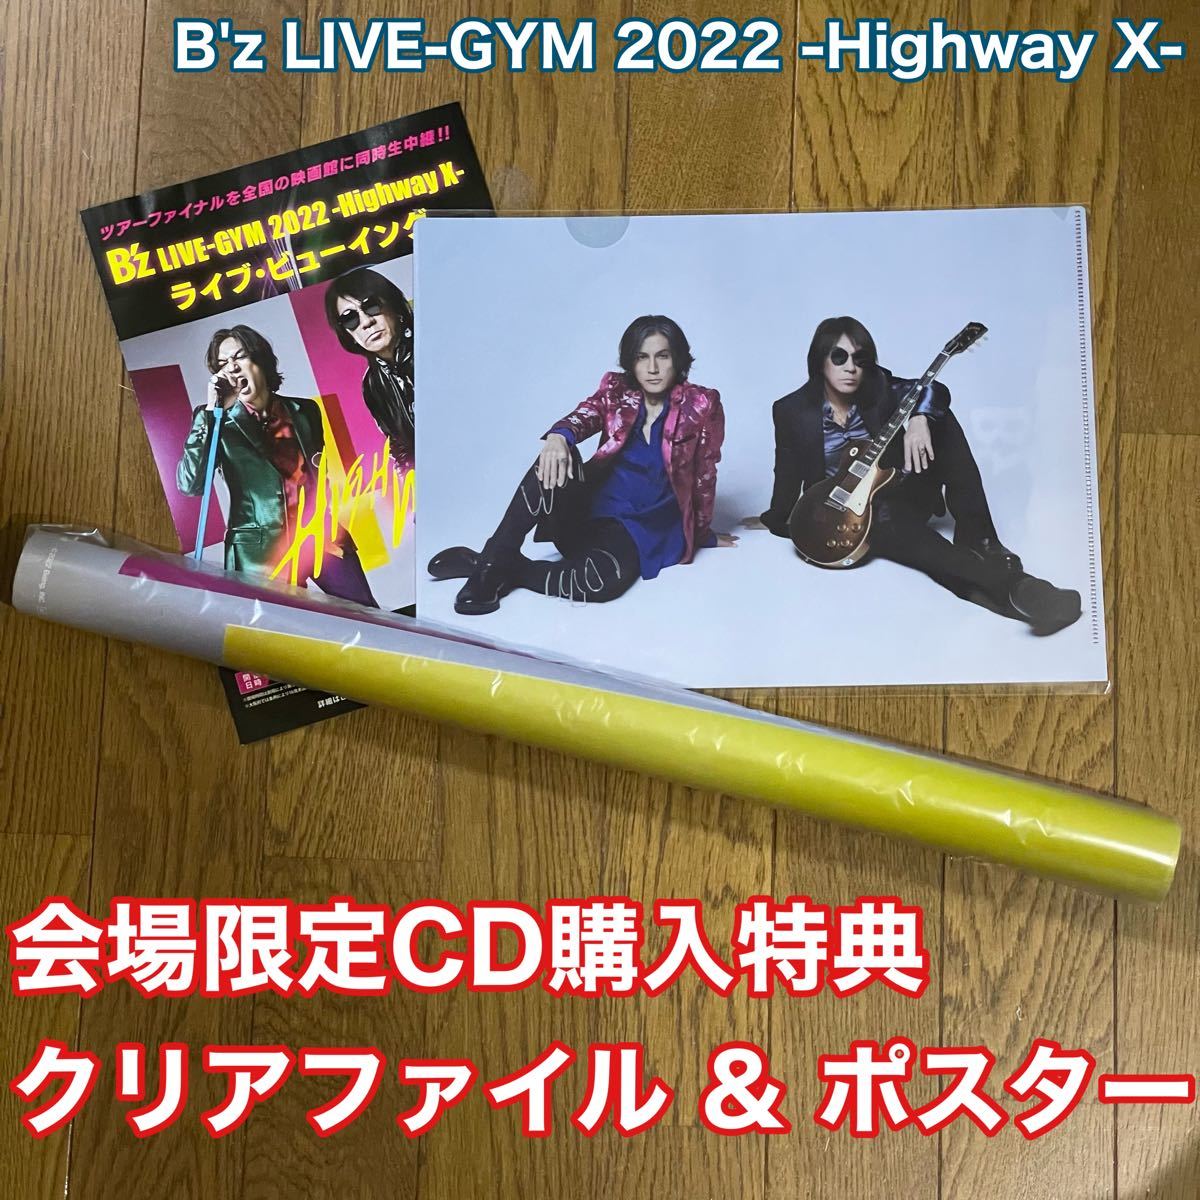 B'z LIVE-GYM 2022 Highway X 会場限定CD予約購入特典 クリアファイル